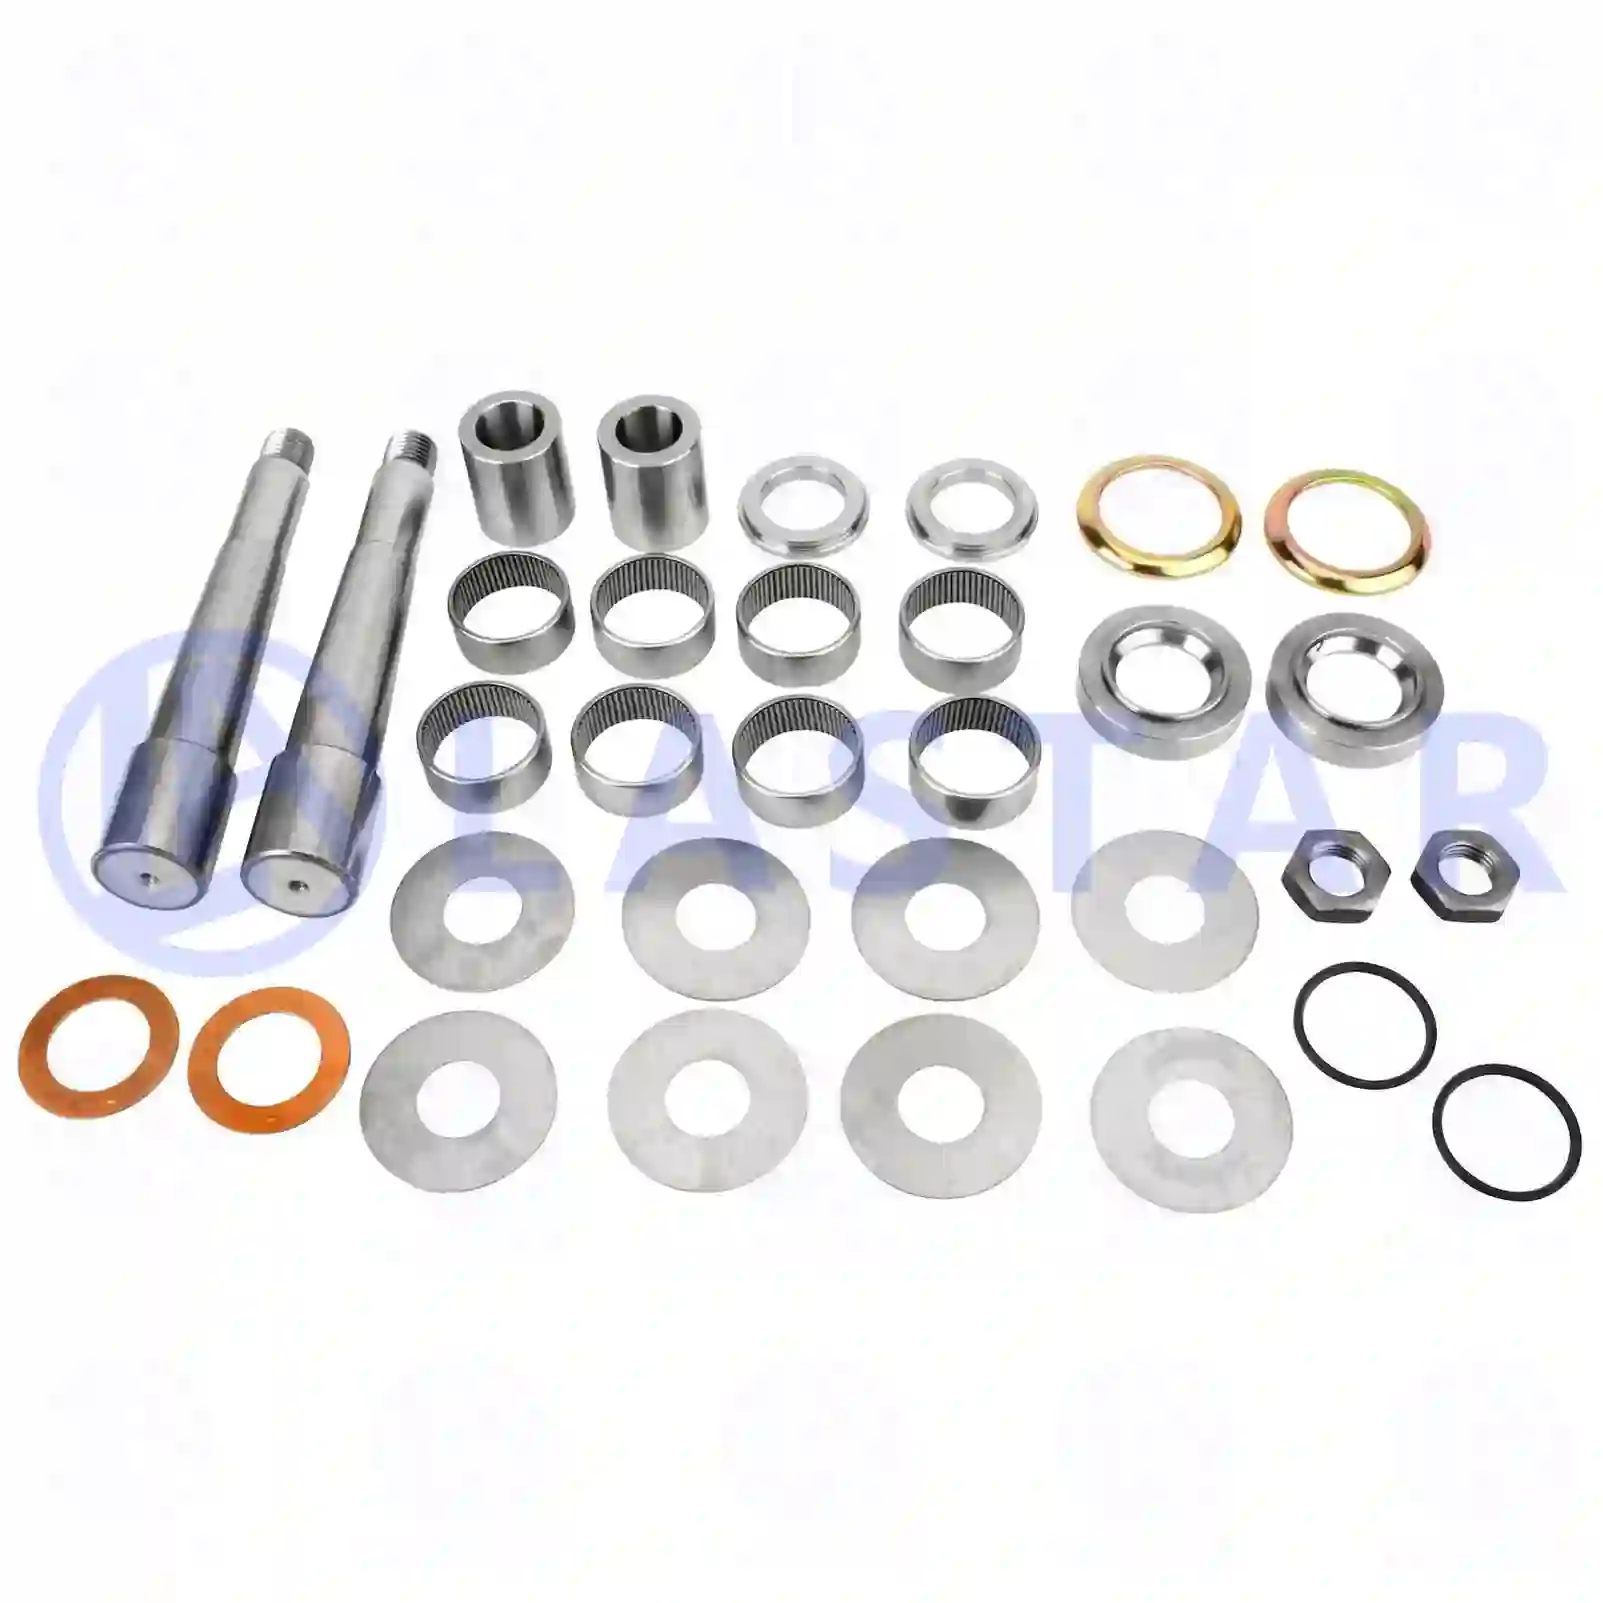  King pin kit, double kit || Lastar Spare Part | Truck Spare Parts, Auotomotive Spare Parts